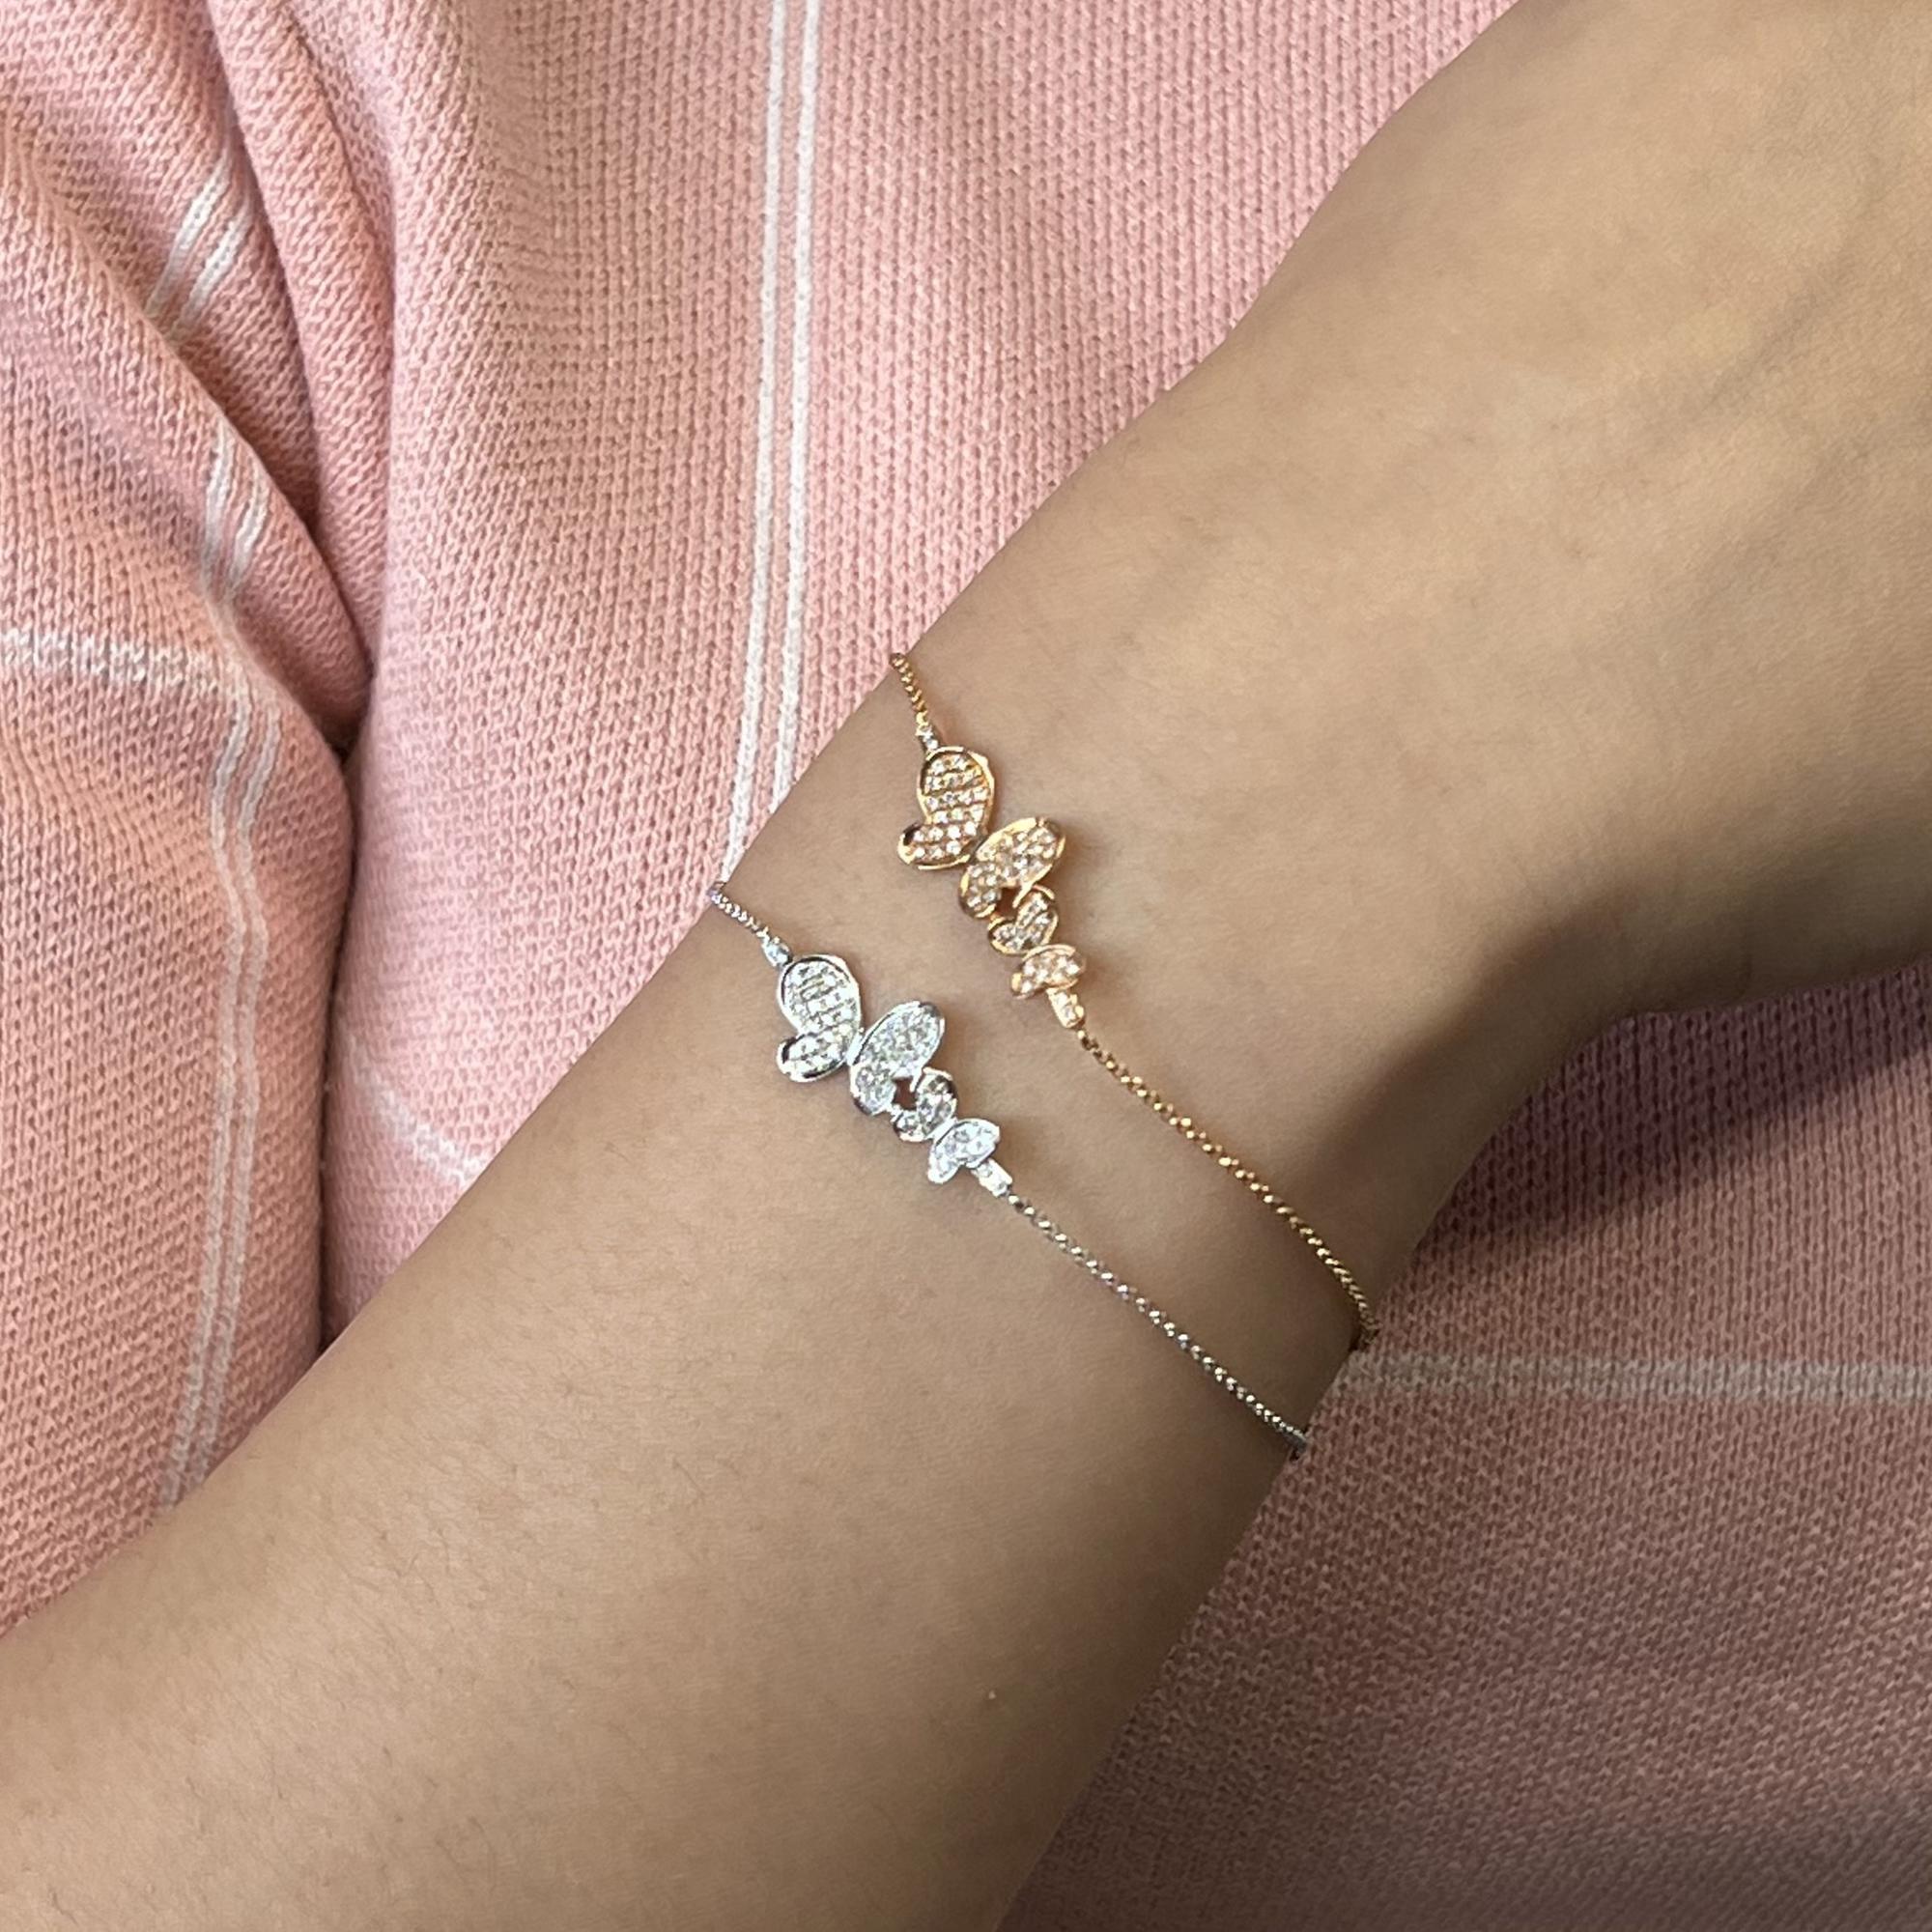 Modern Rachel Koen Simple Diamond Butterfly Chain Bracelet 18k Rose Gold 0.36cttw For Sale